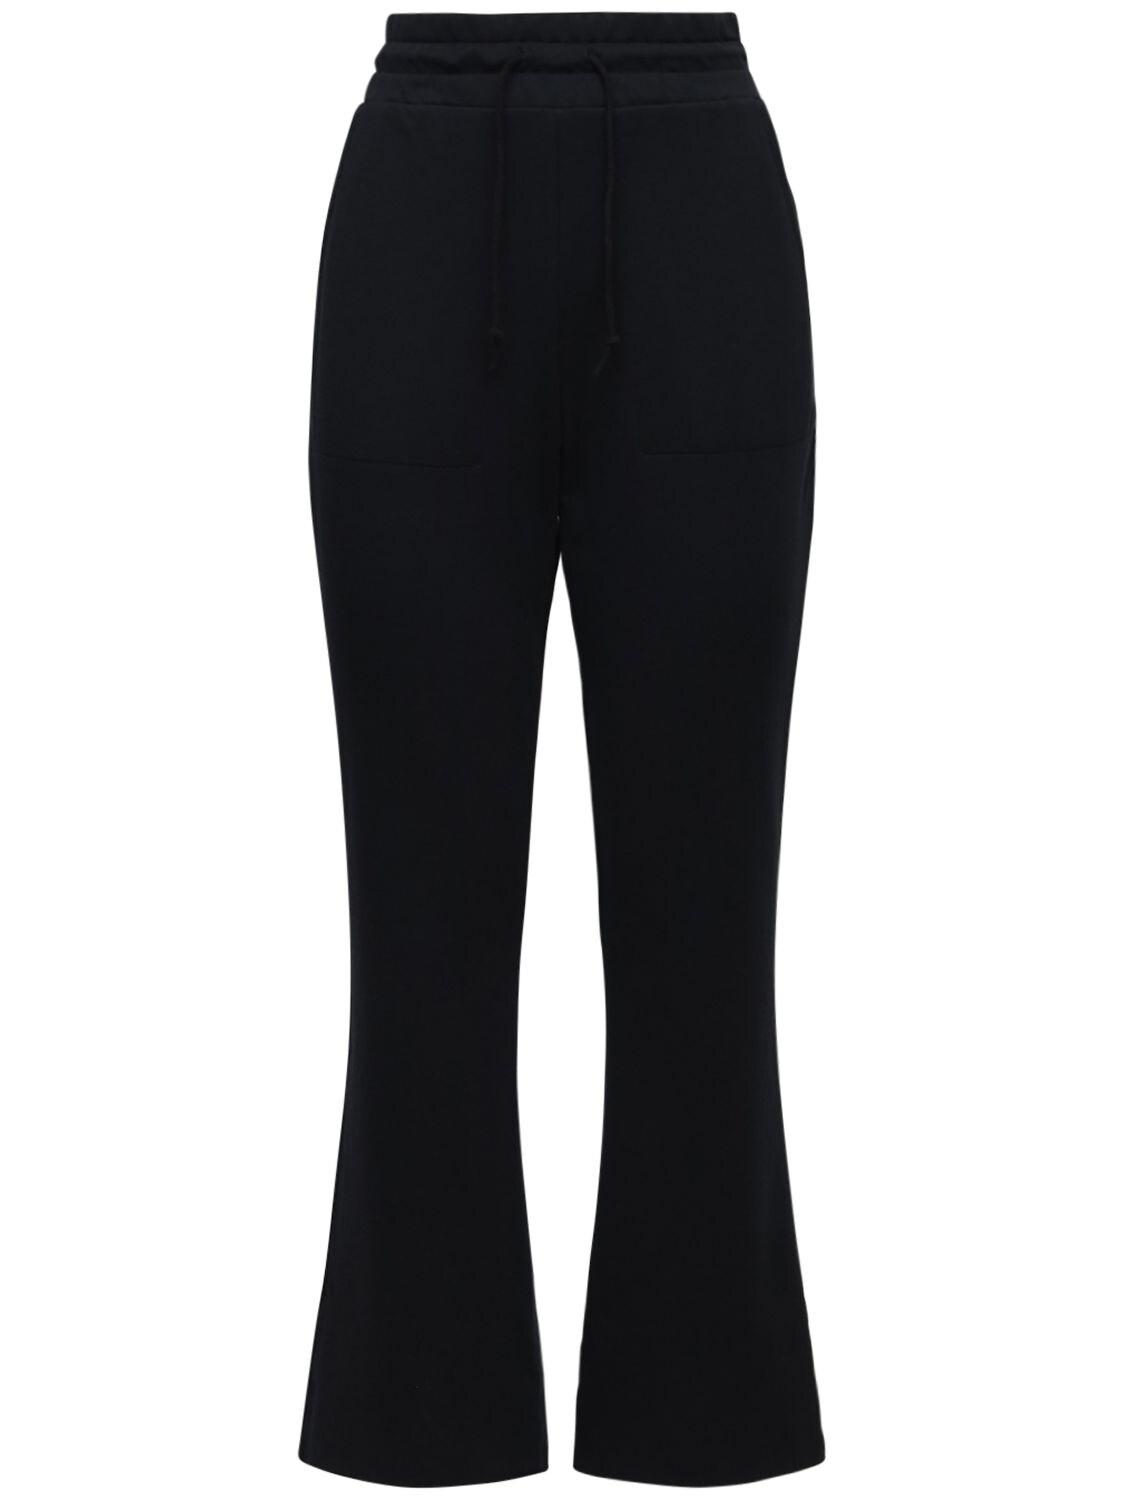 Nike Synthetic Dri-fit Flared Yoga Full Length Pants in Black/Smoke Grey  (Black) | Lyst